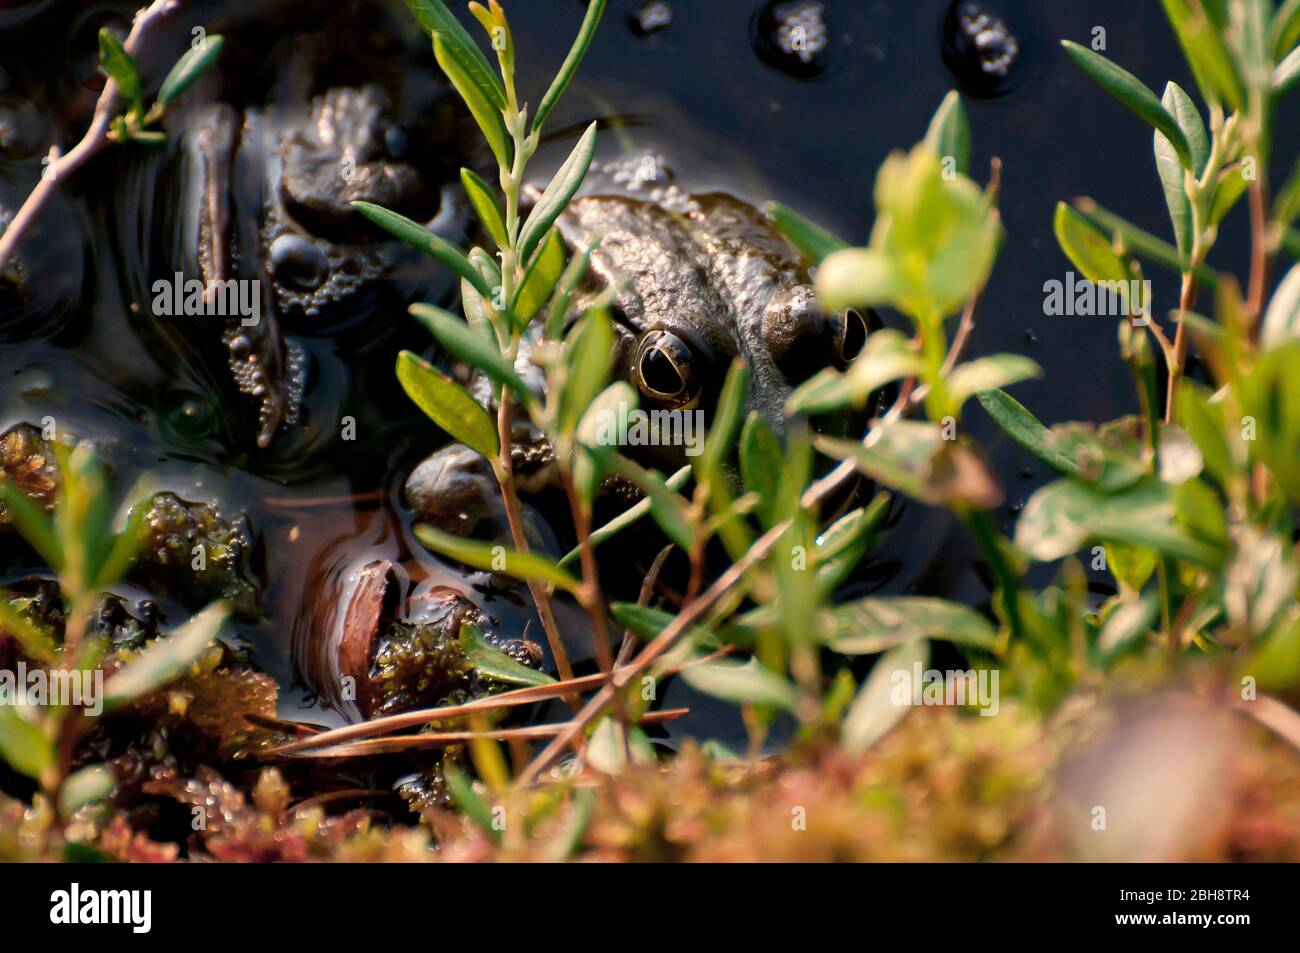 Sea frog, pond frog, in lurking position, Pelophylax ridibundus, Rana ridibunda, Bavaria, Germany Stock Photo